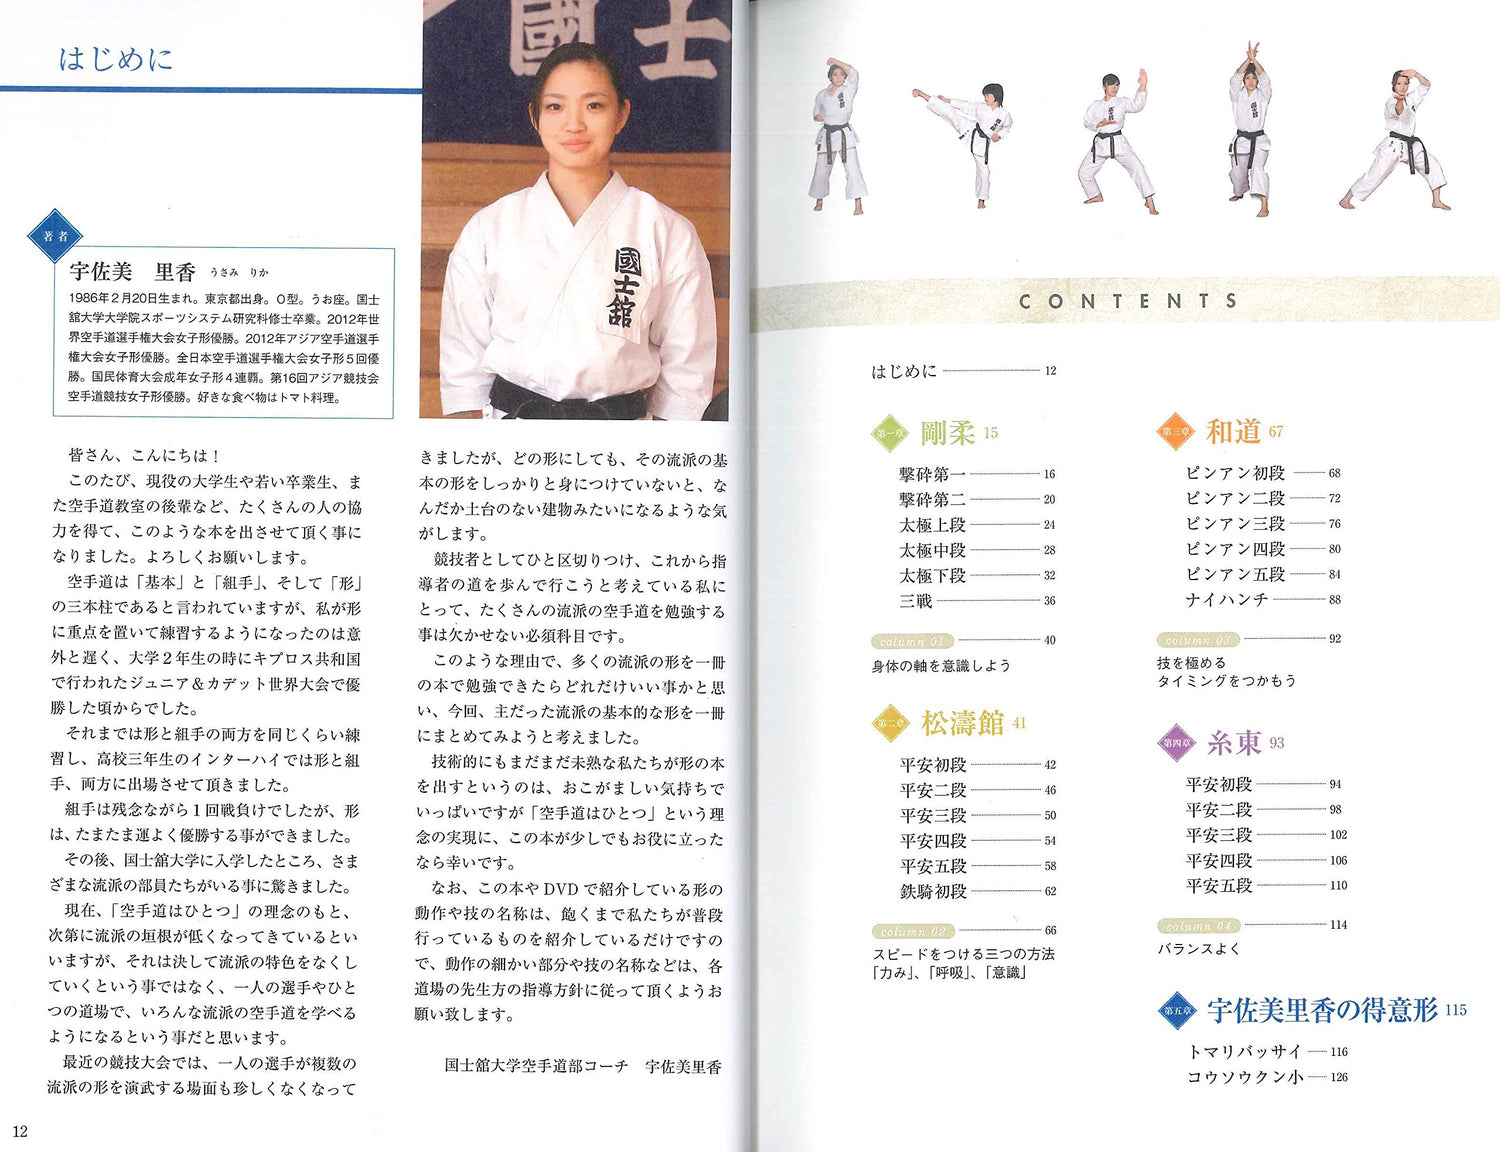 Basic Kata of 4 Major Schools of Karate Book & DVD by Rika Usami - Budovideos Inc